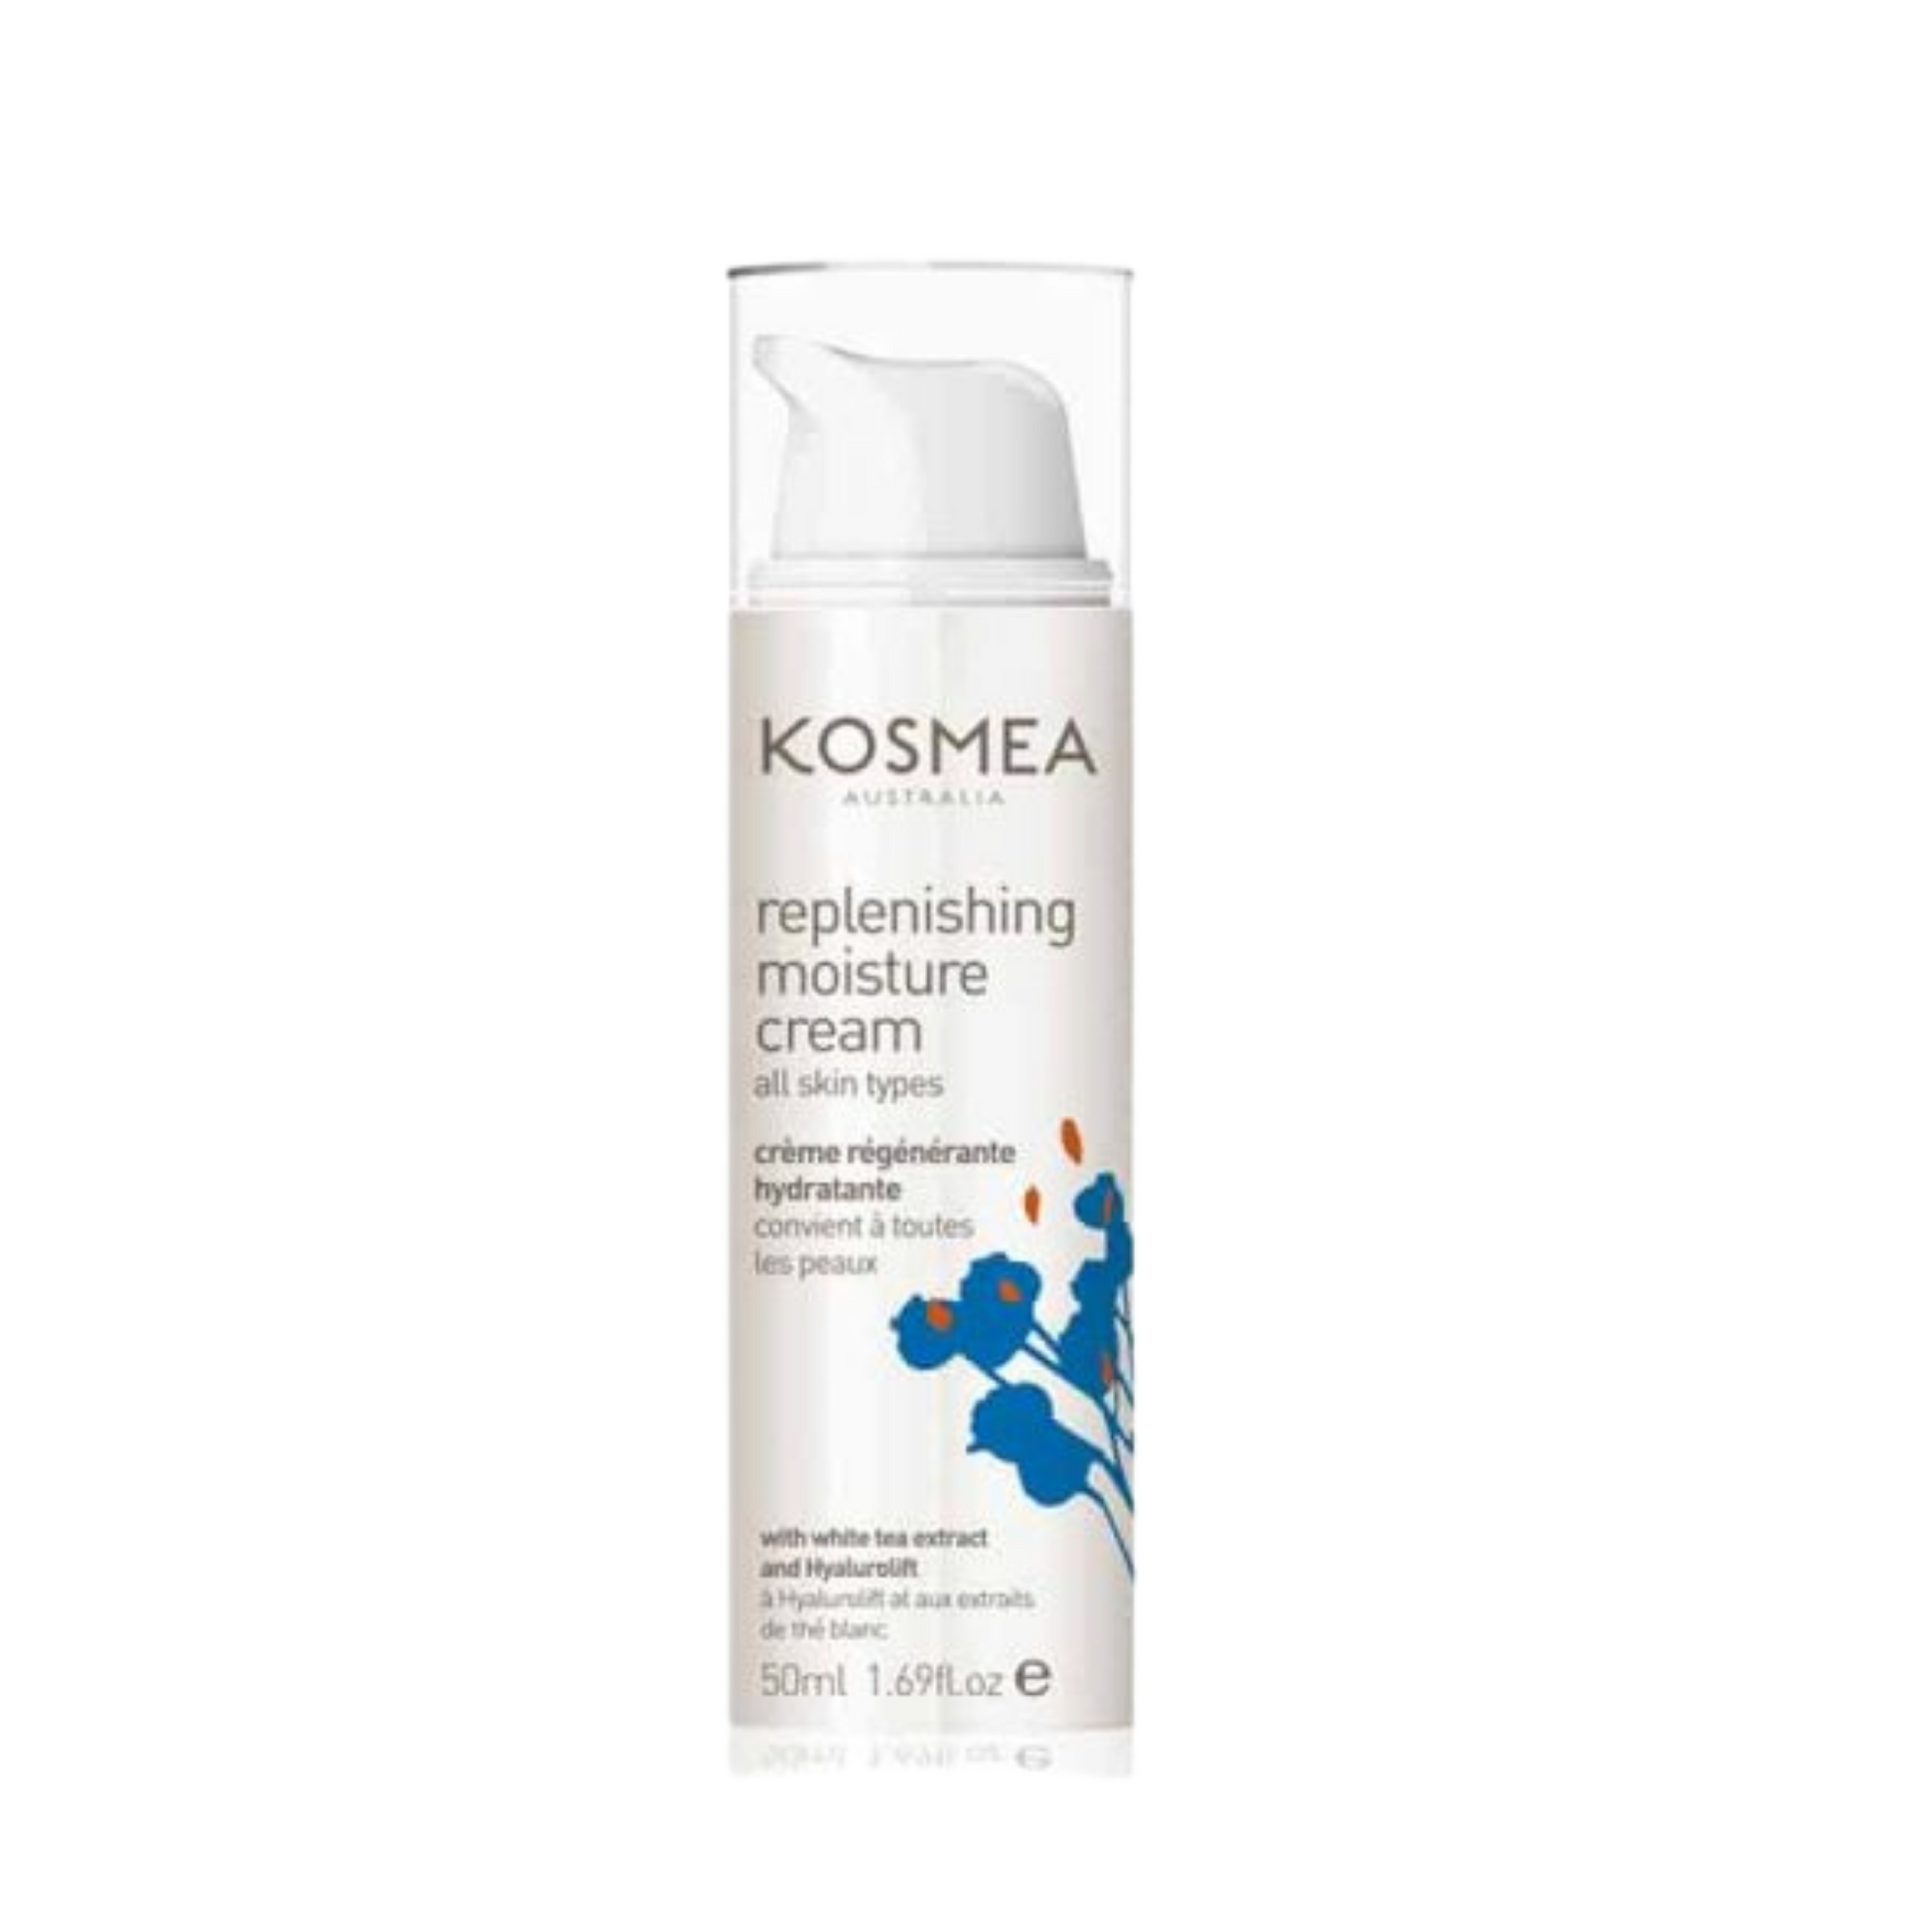 Kosmea Replenishing Moisture Cream 50mL